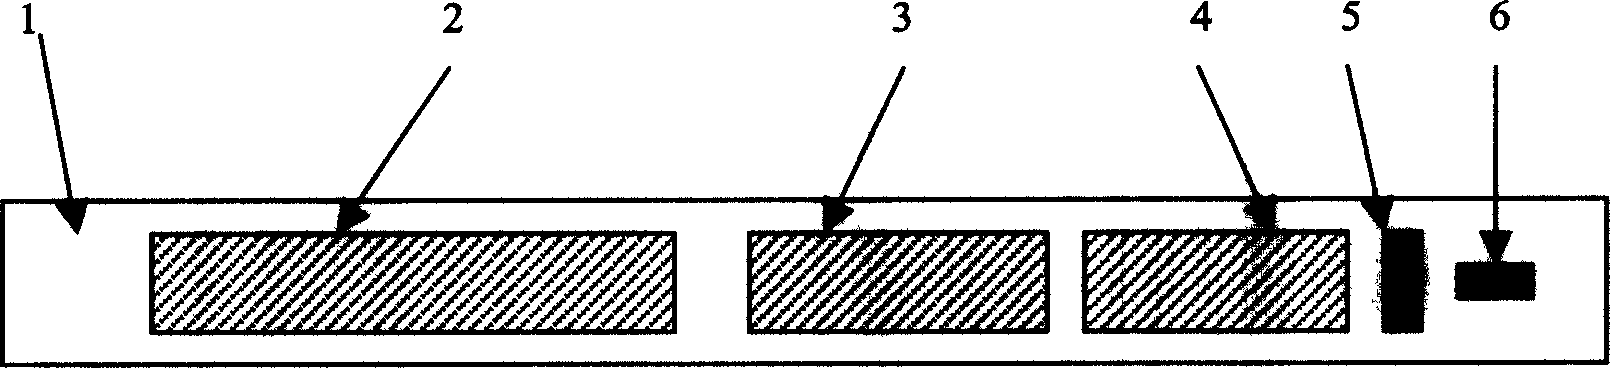 A chlorine spectrometry logging method